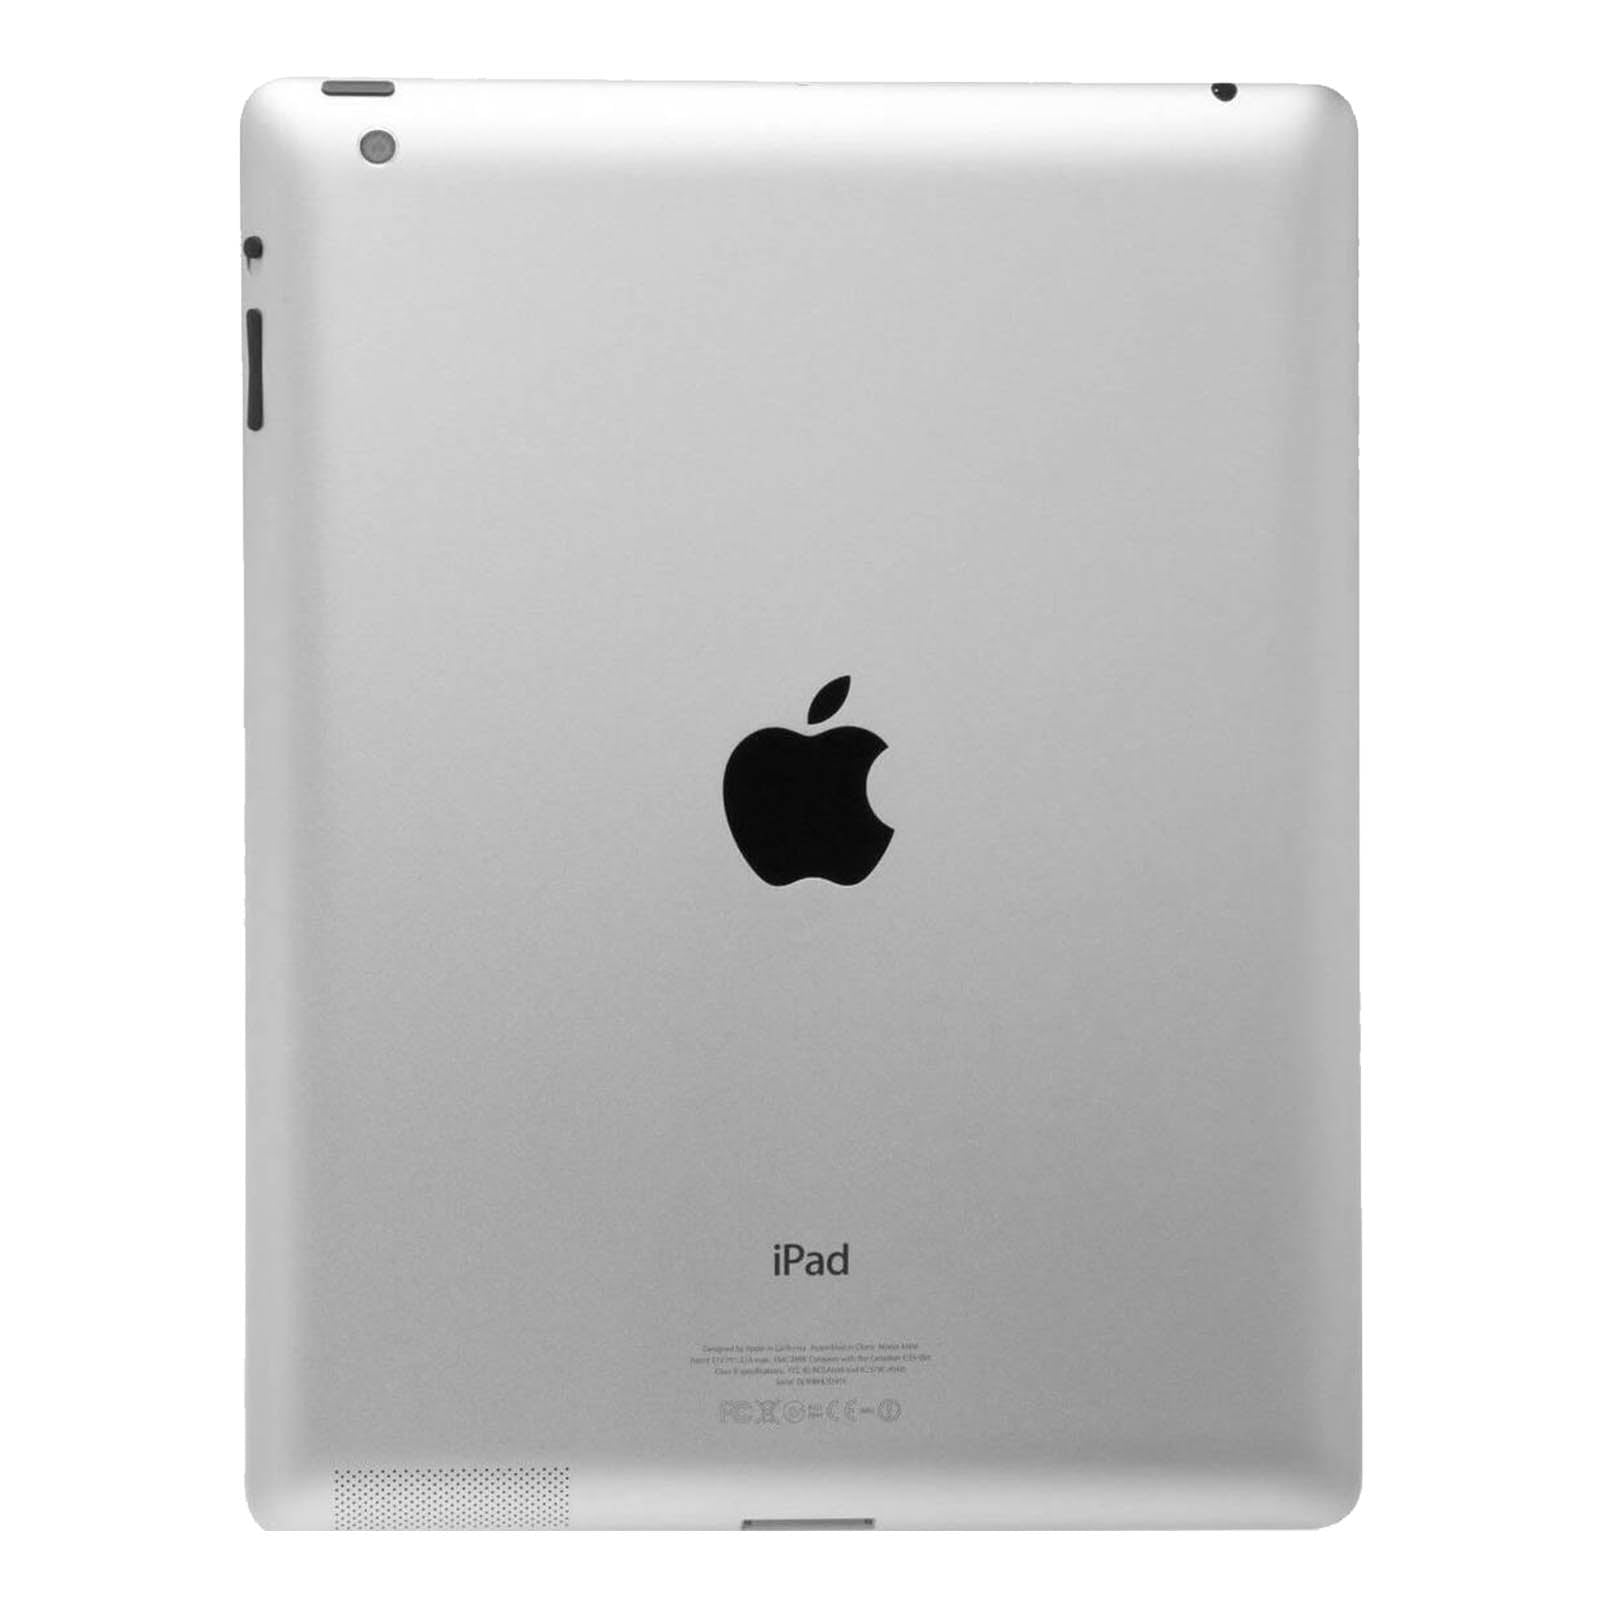 iPad 4 16GB WiFi Schwarz Makellos WiFi